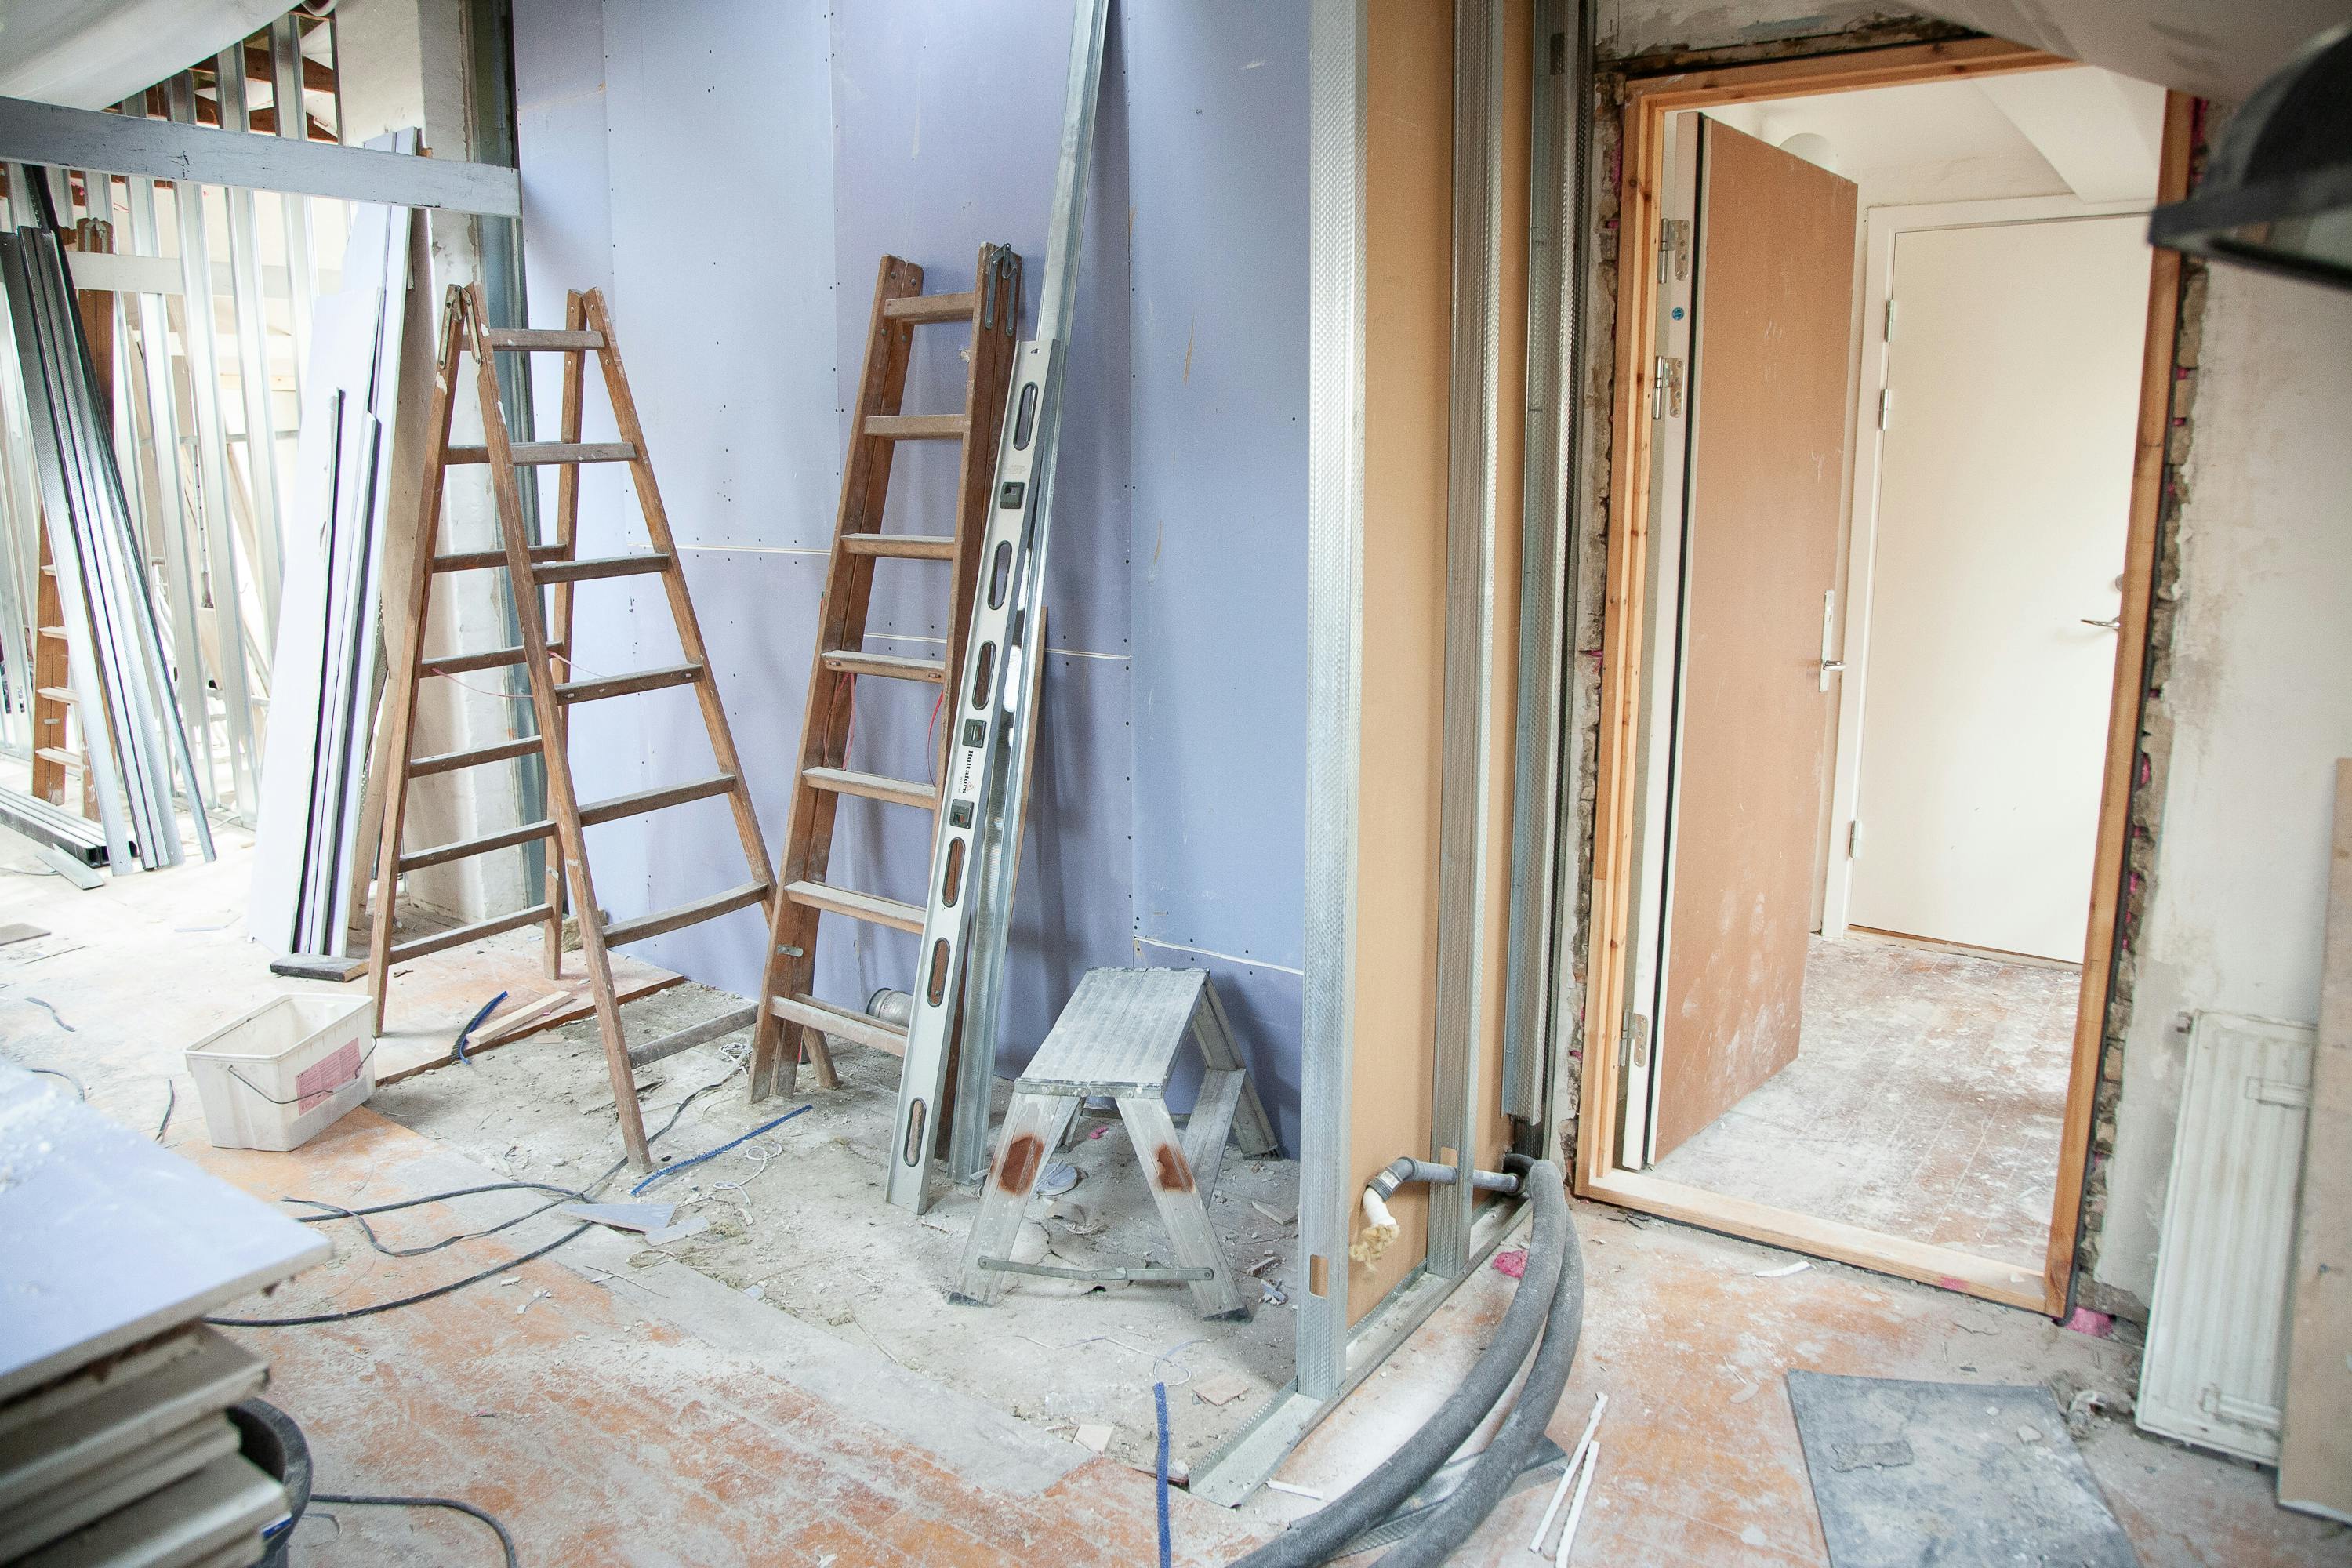 A room under construction | Source: Pexels